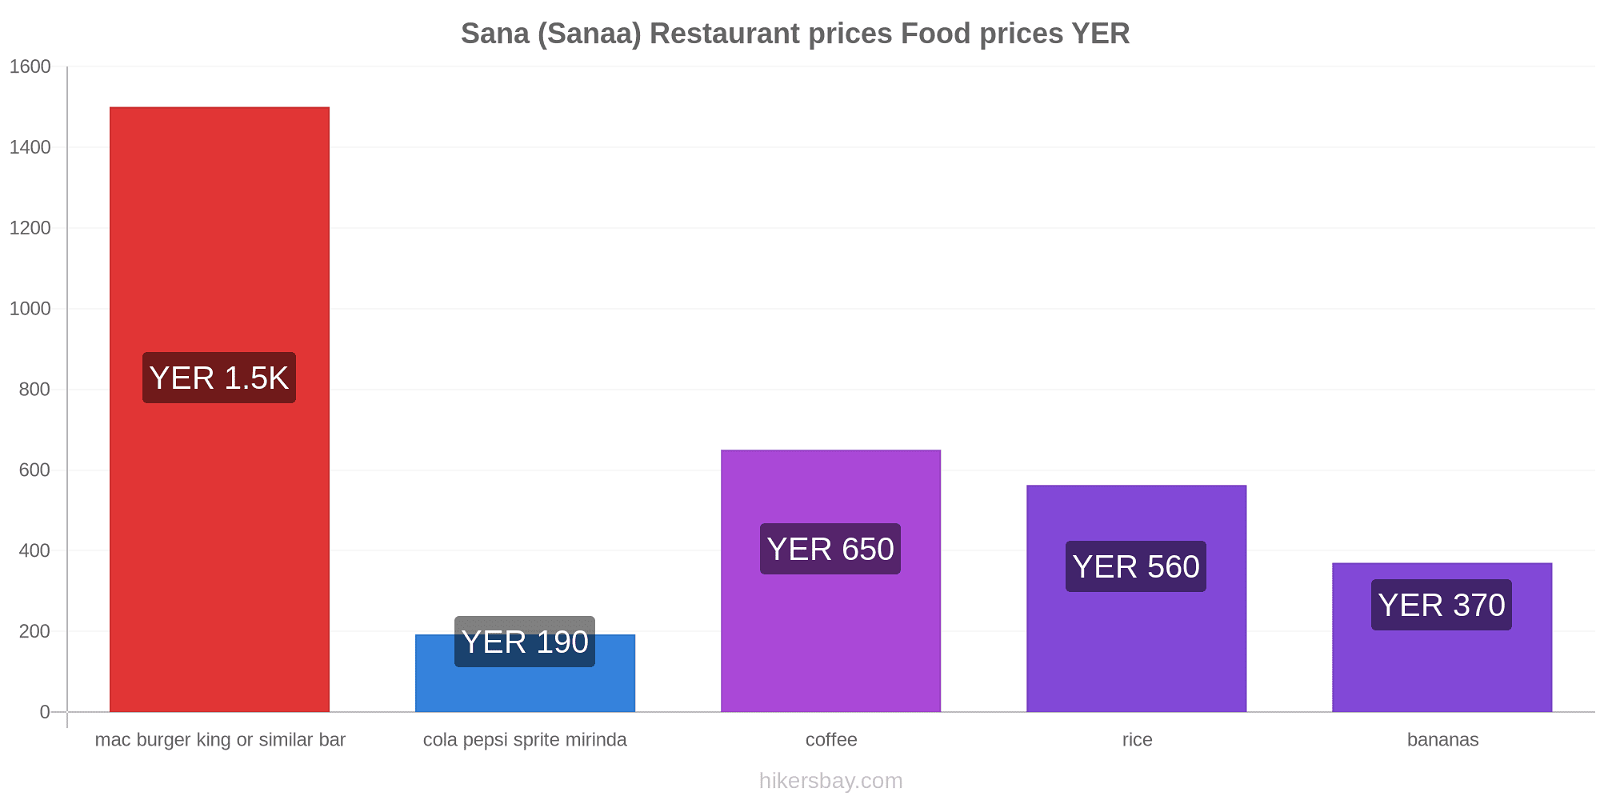 Sana (Sanaa) price changes hikersbay.com